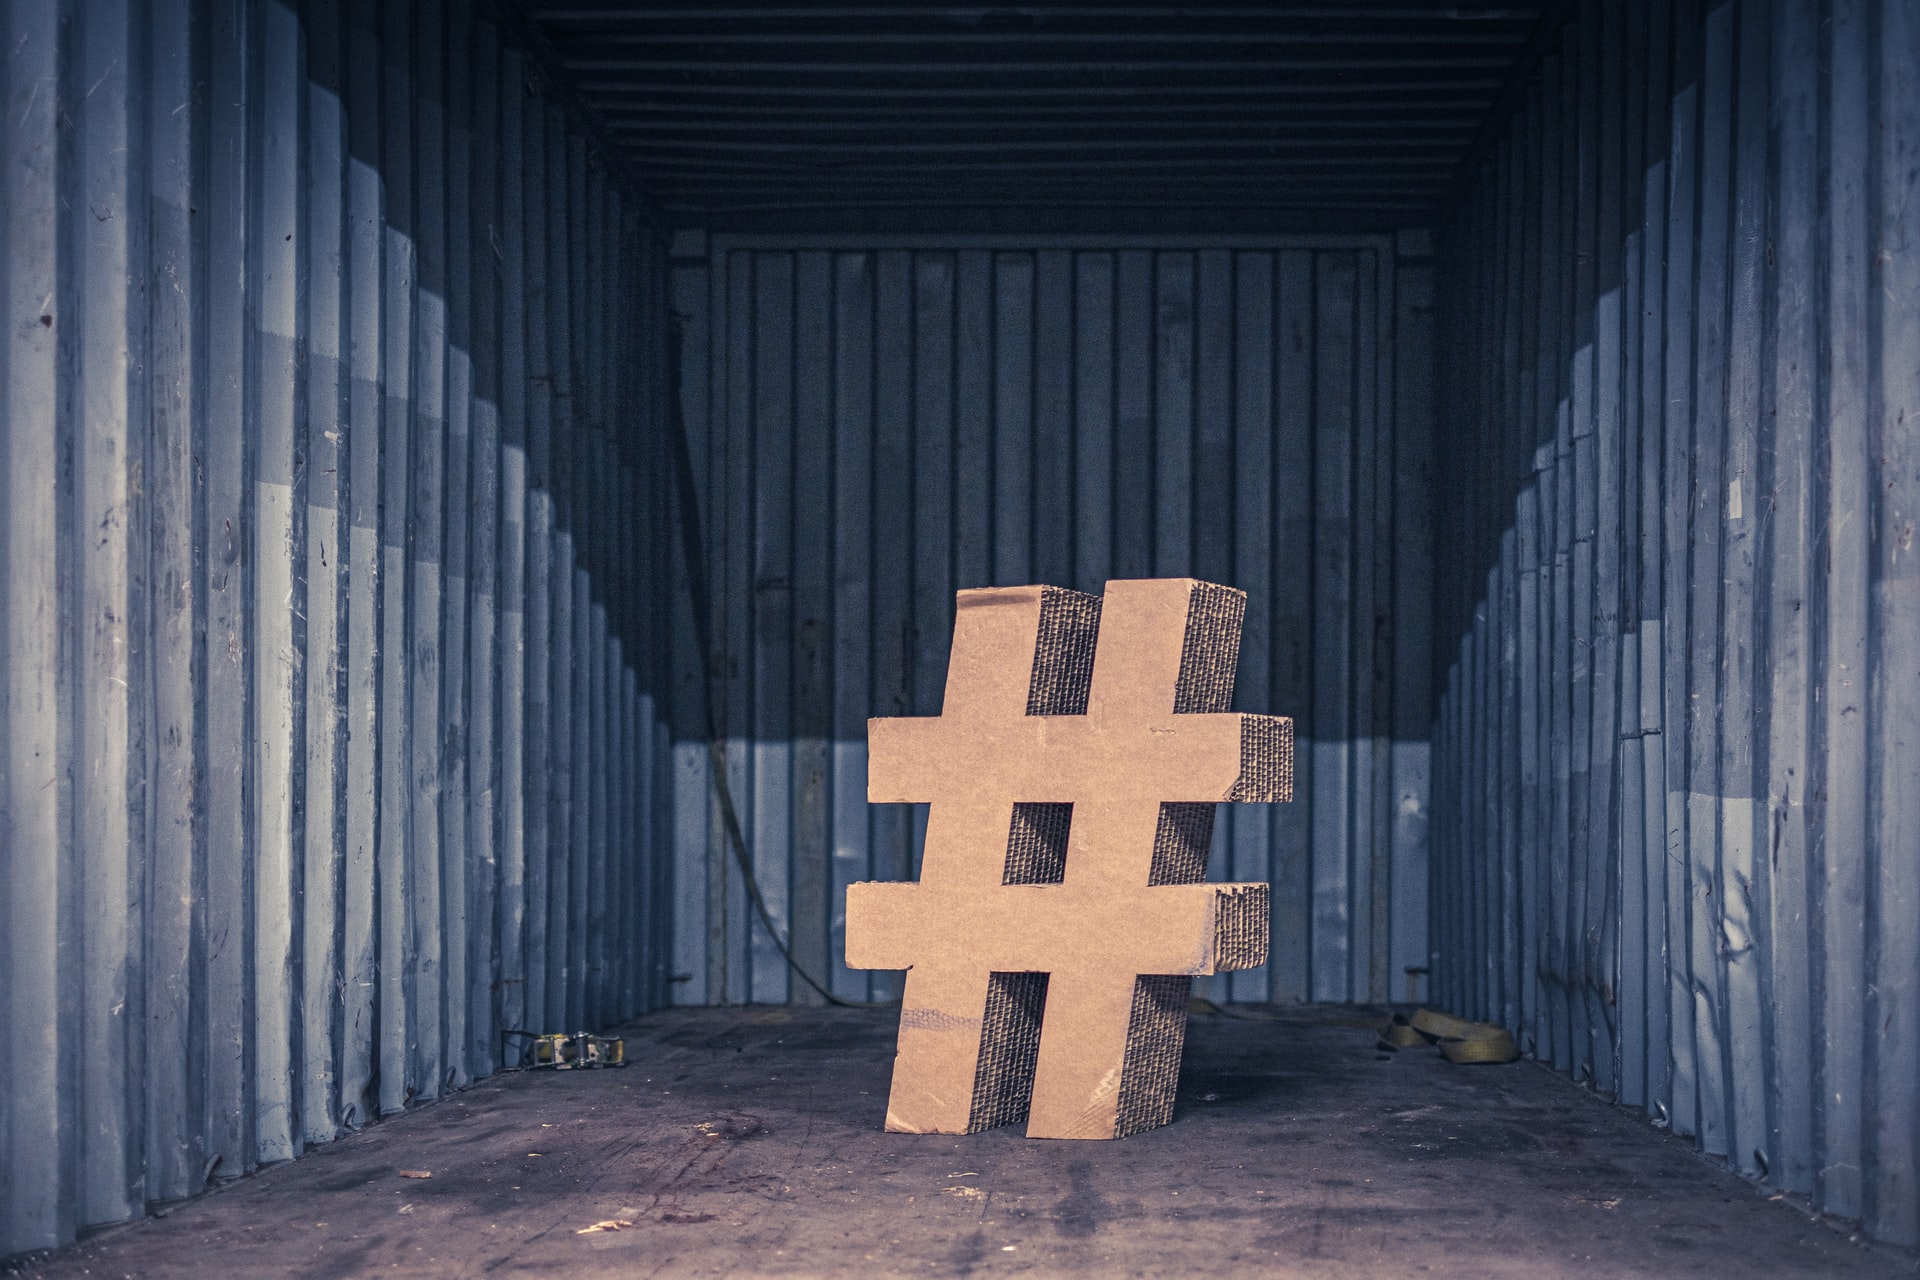 Photo of cardboard hashtag symbol by Jan Baborák on Unsplash